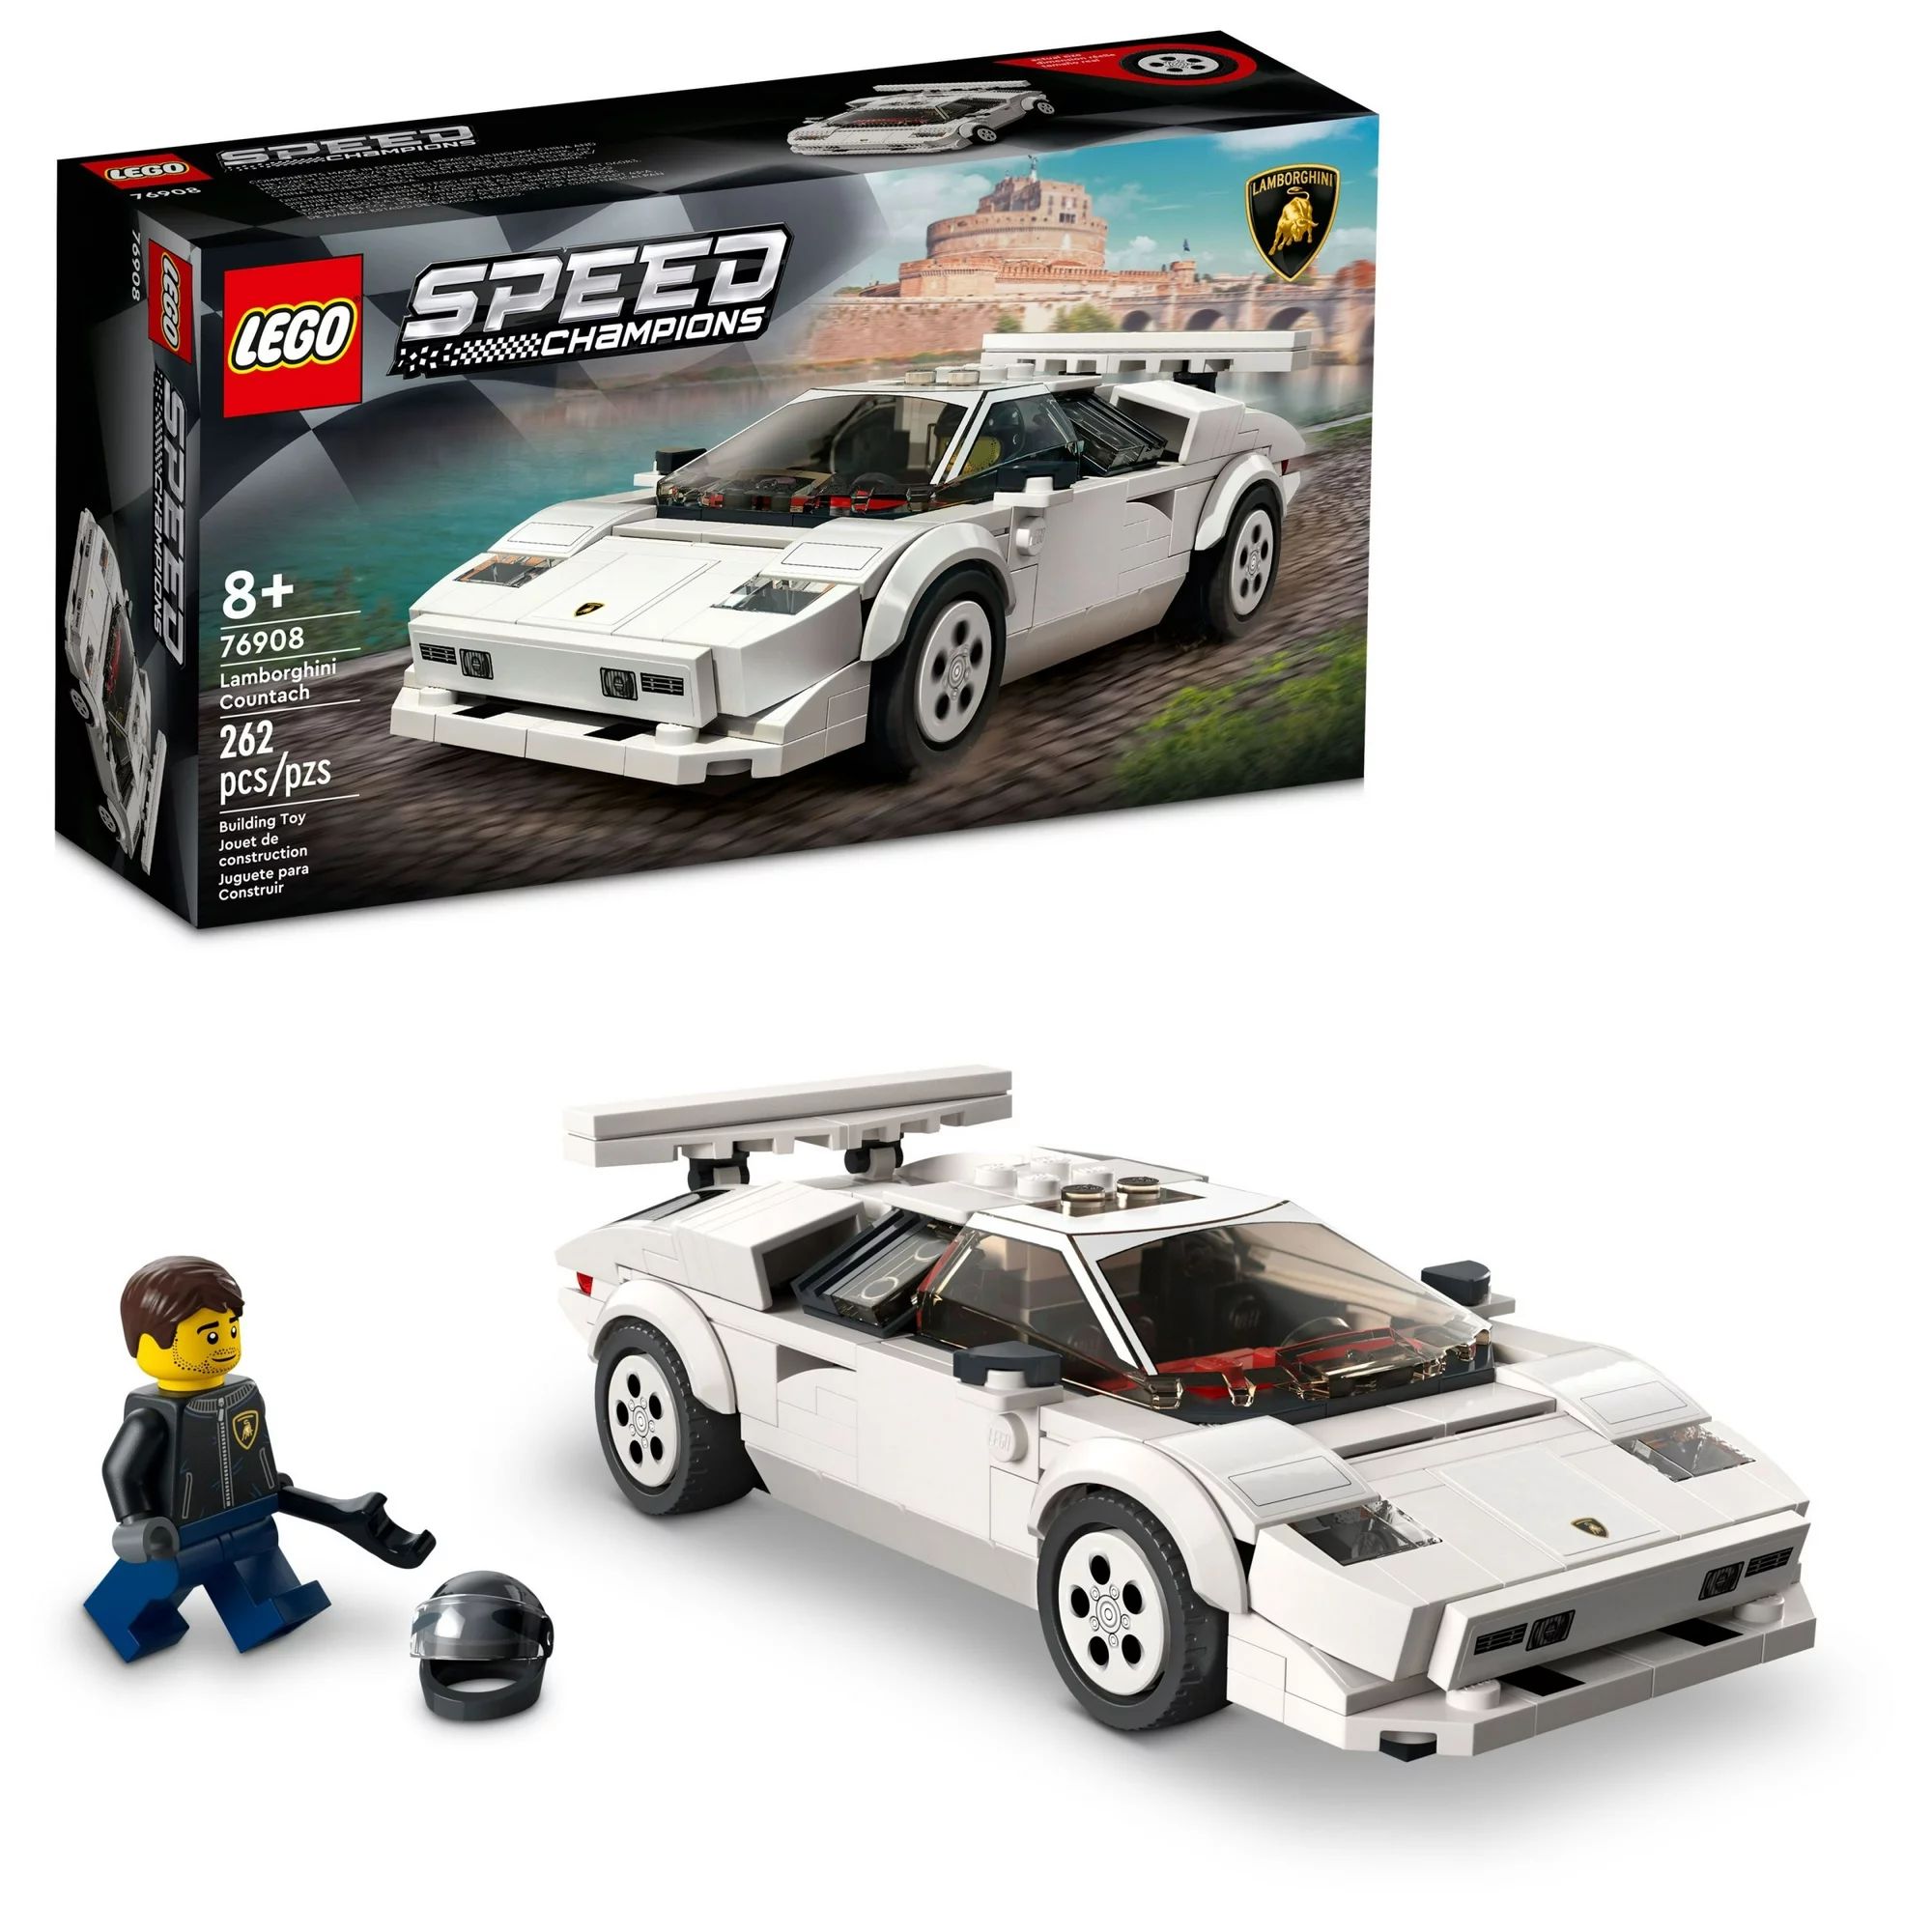 LEGO Speed Champions Lamborghini Countach 76908, Race Car Toy Model Replica, Collectible Building... | Walmart (US)